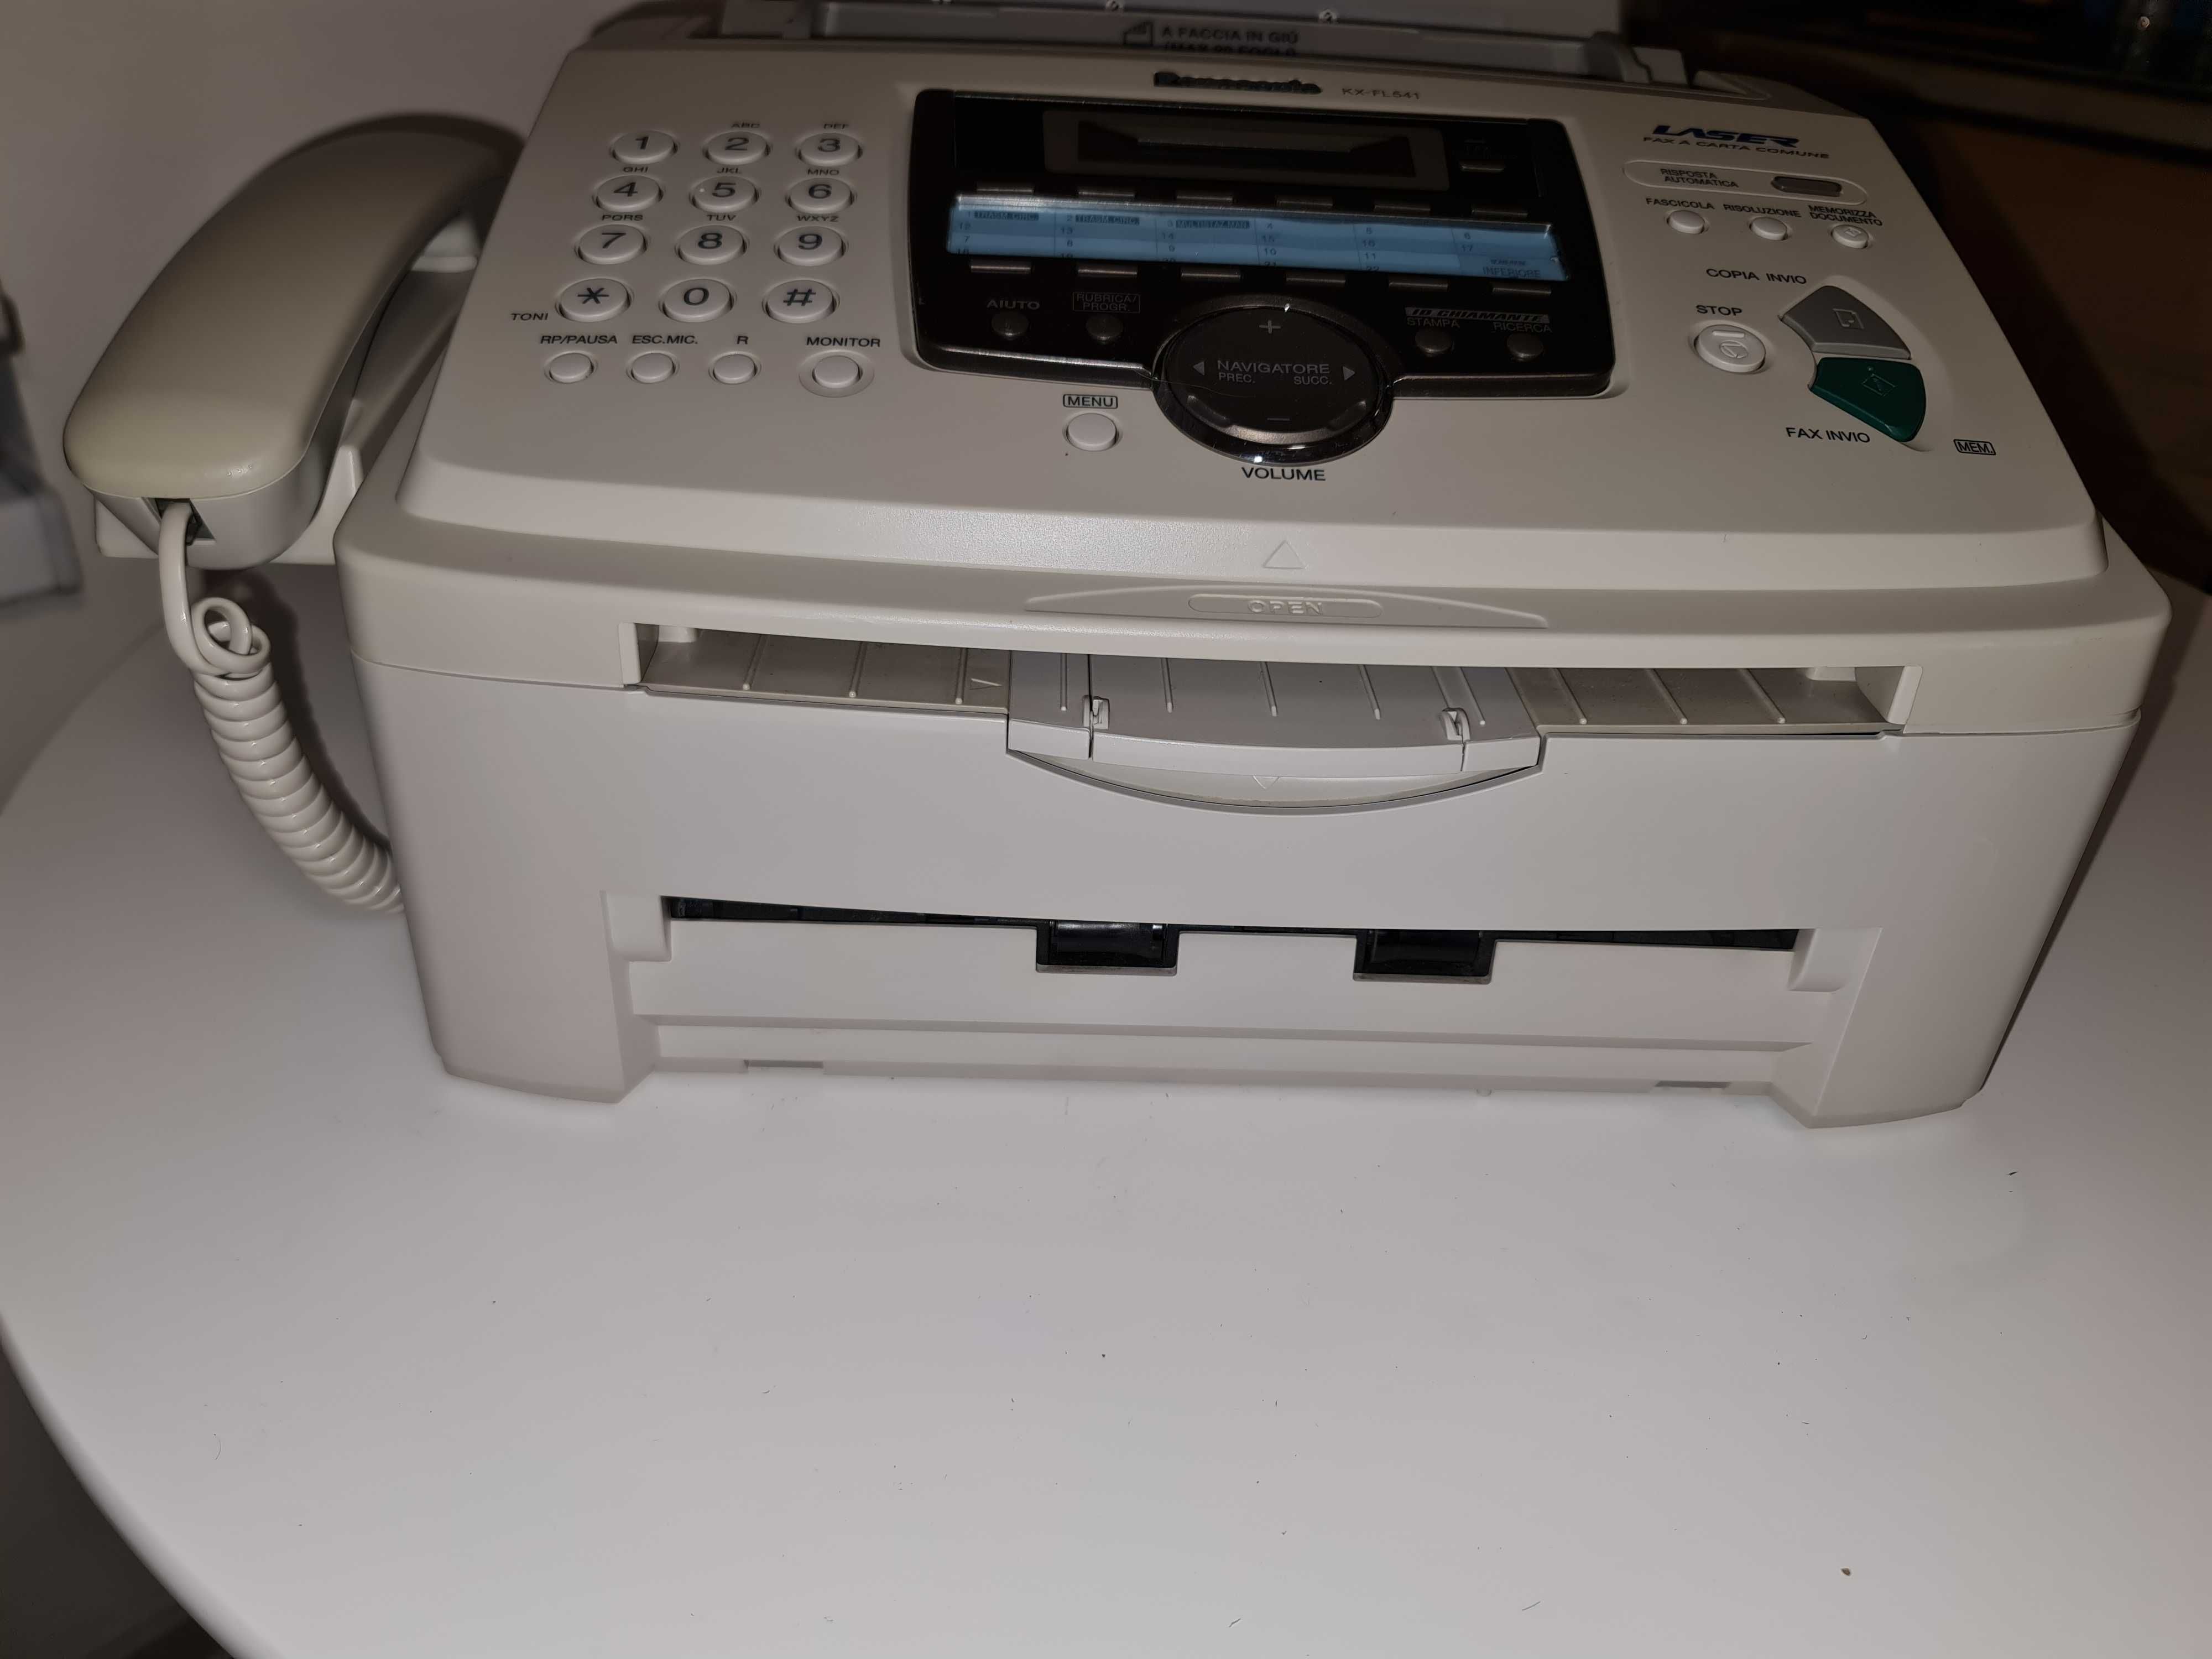 Panasonic KX-FL541 Multifunctional Printer-Copier-Fax